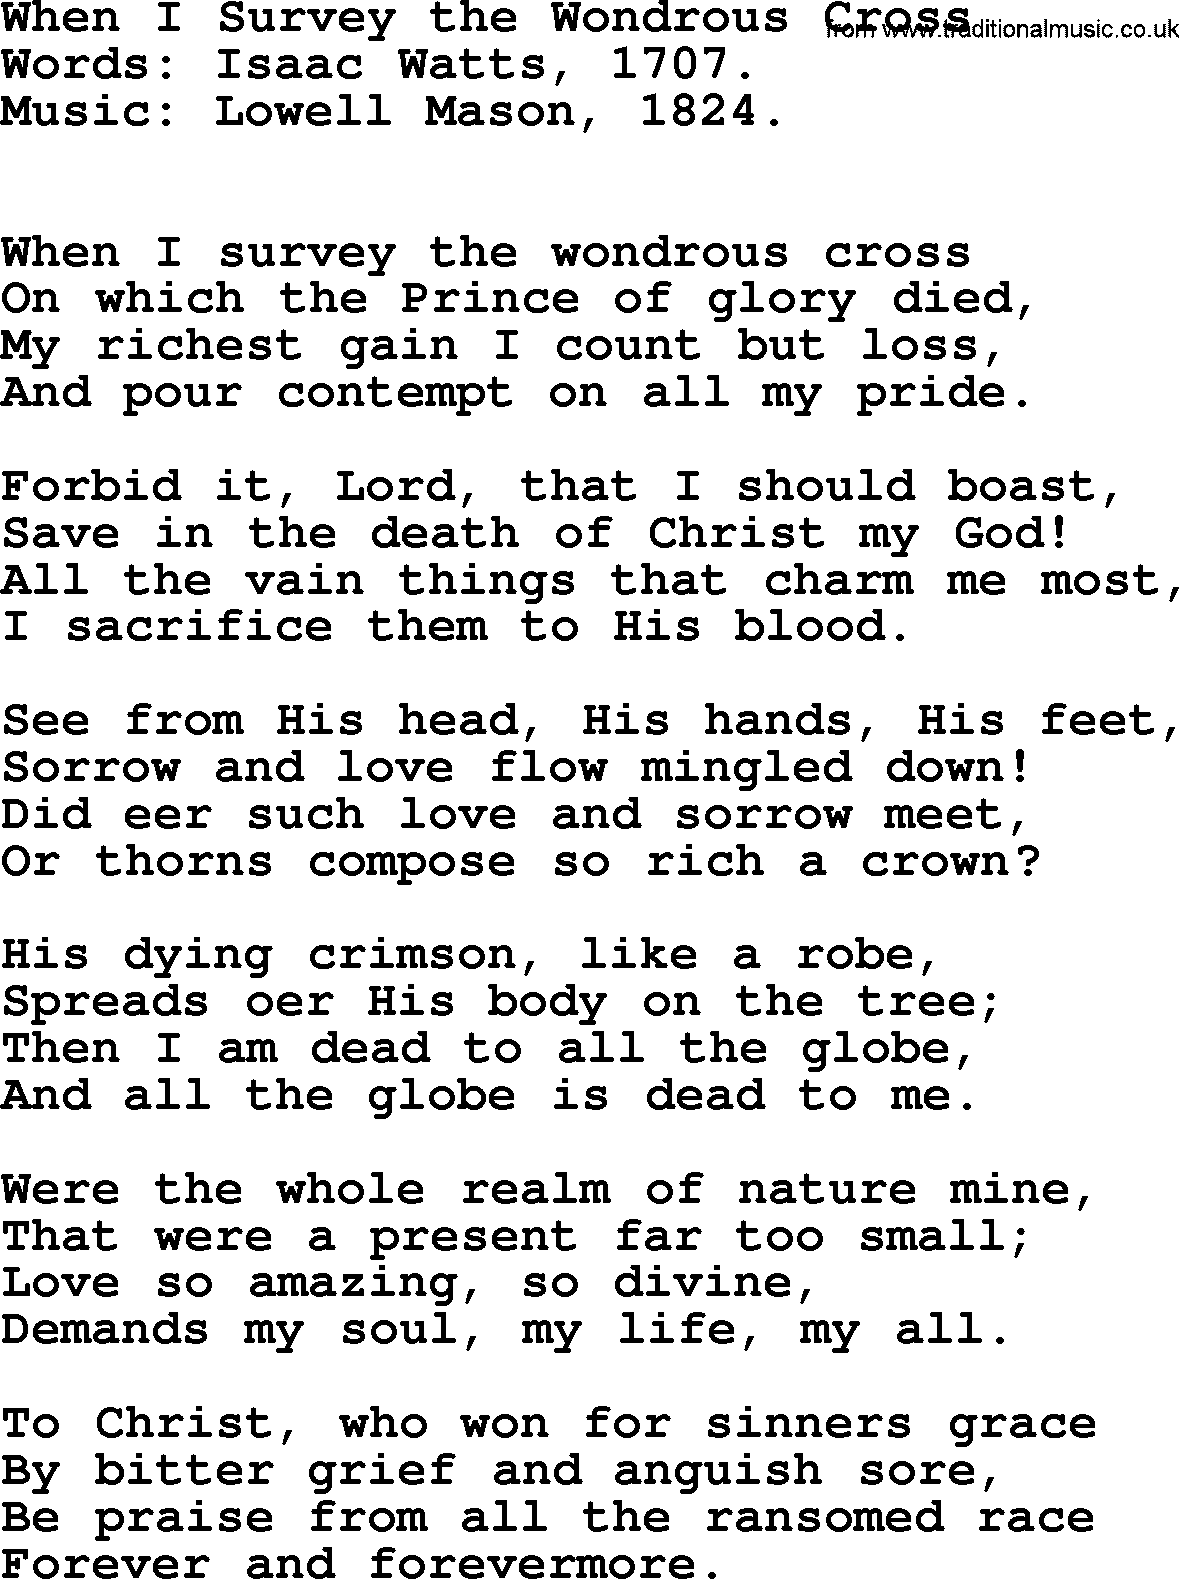 Isaac Watts Christian hymn: When I Survey the Wondrous Cross- lyricss